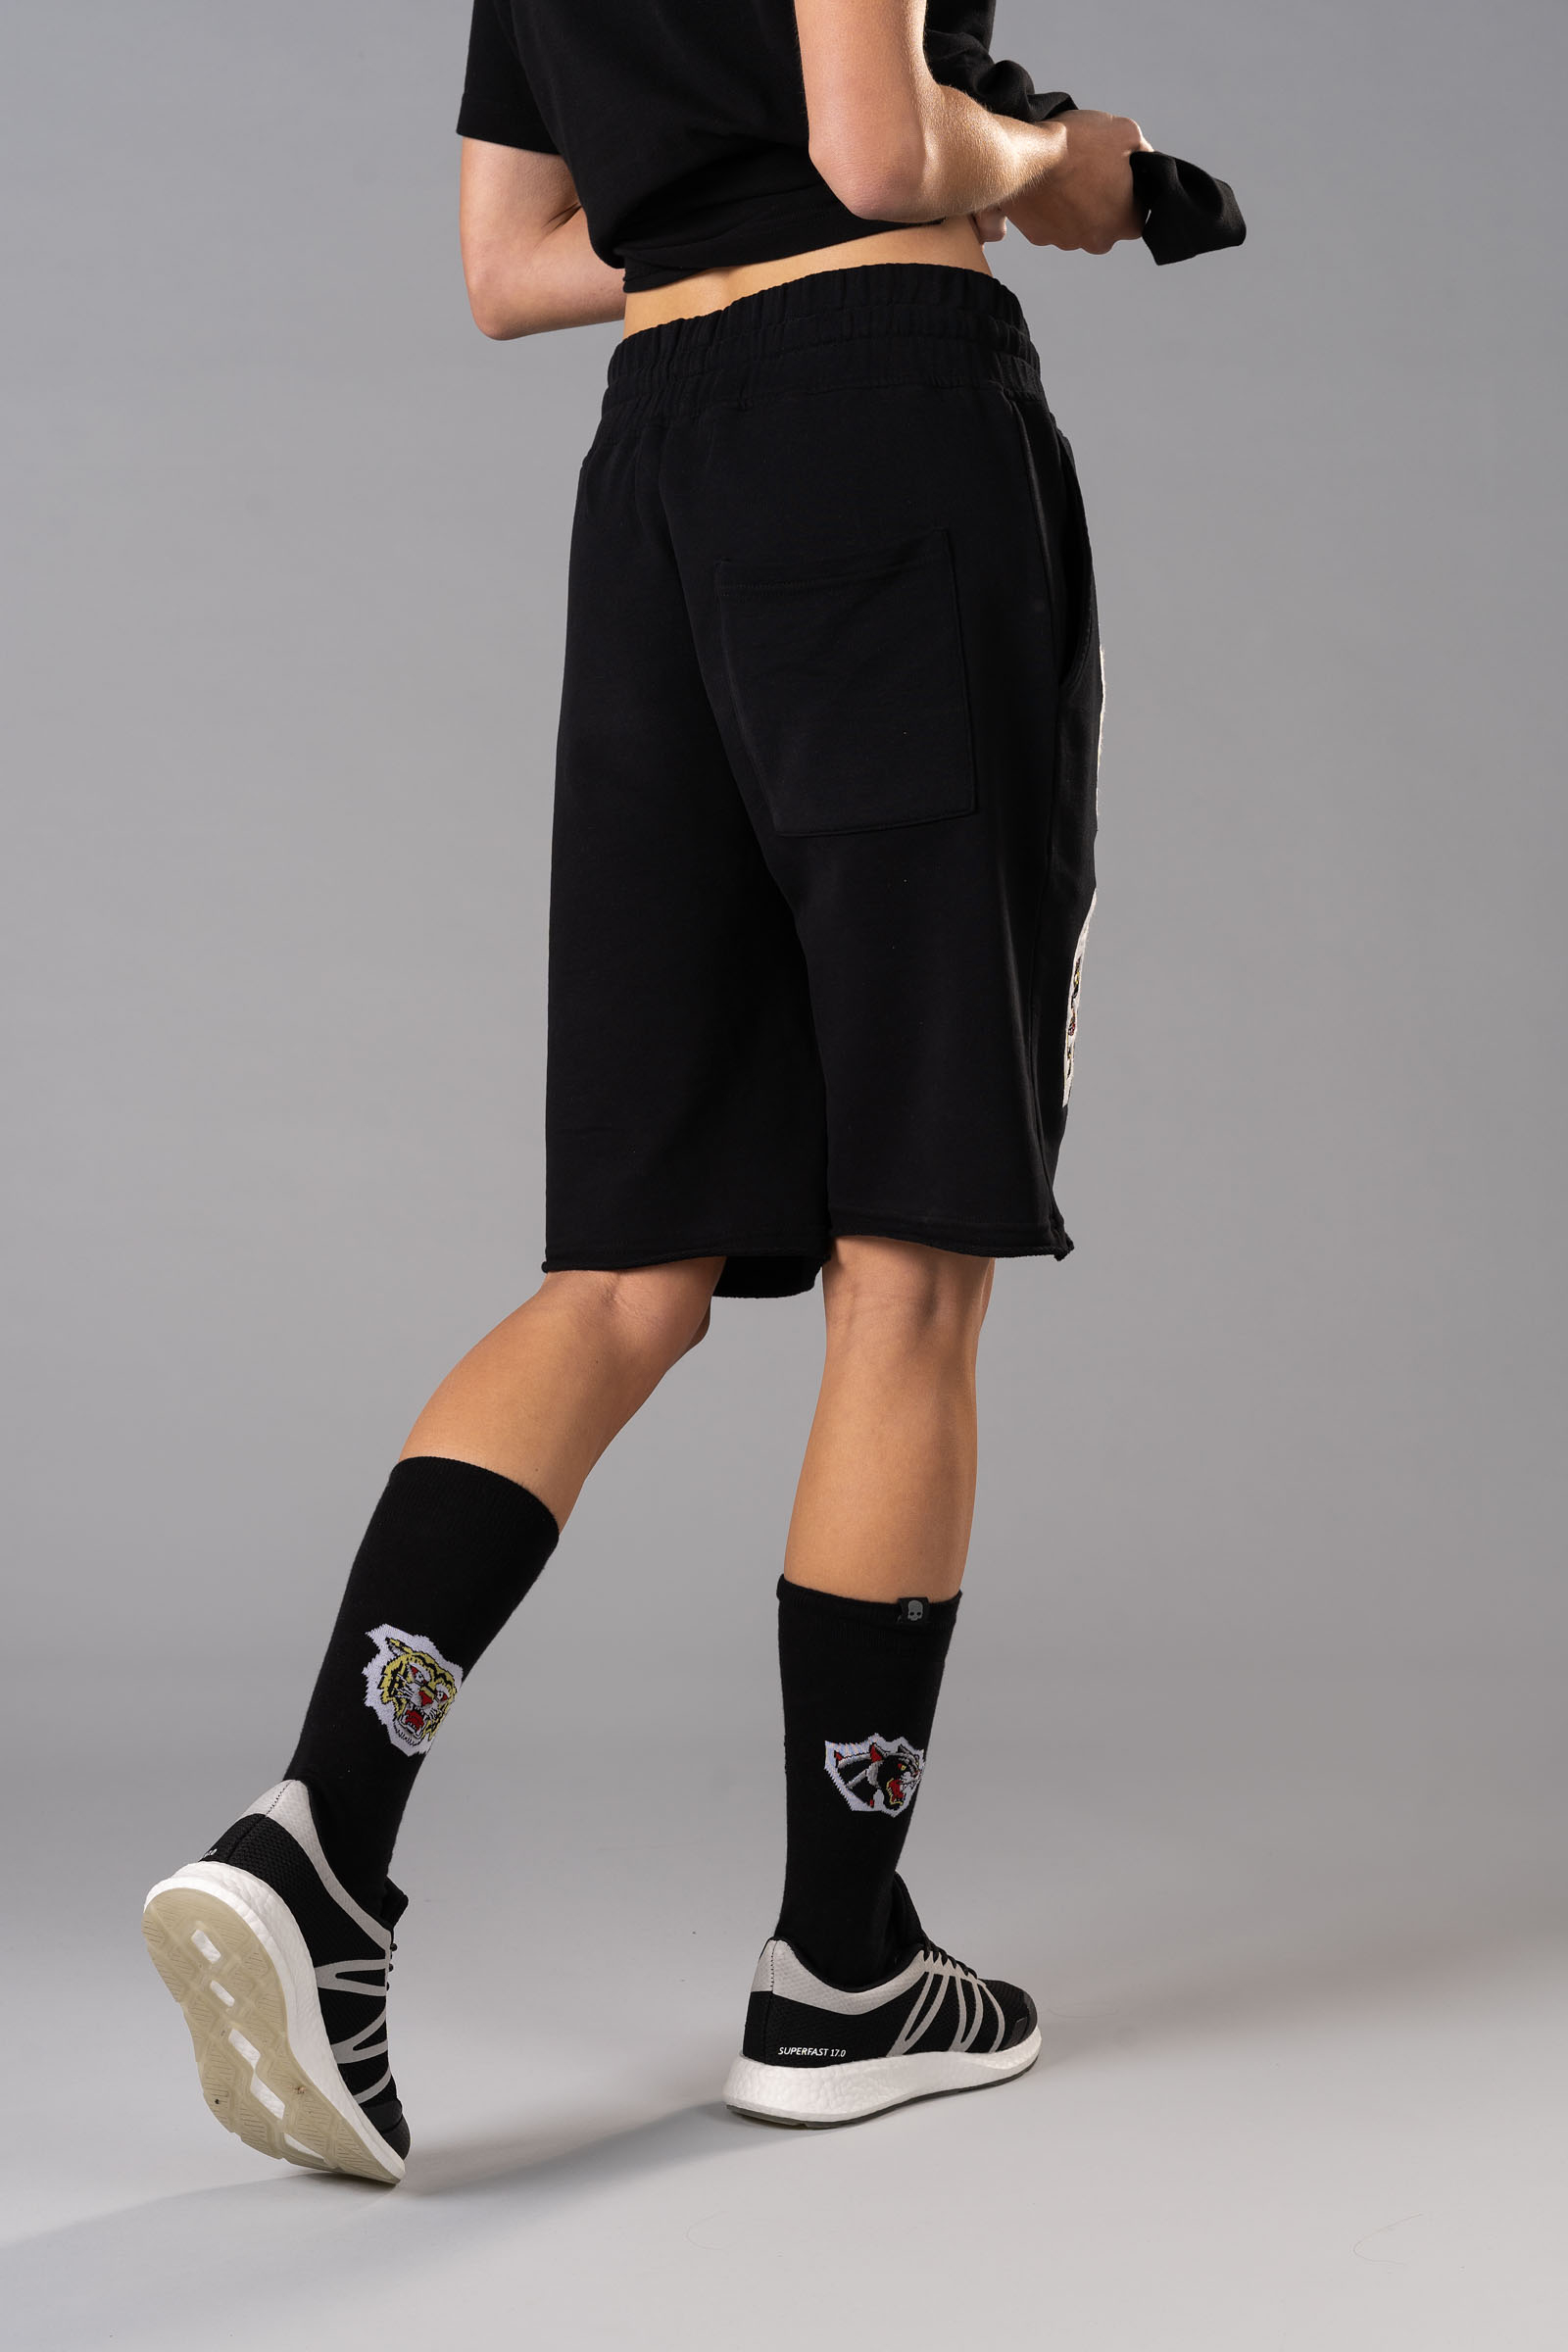 CUSTOM TATTOO SHORTS - BLACK - Hydrogen - Luxury Sportwear